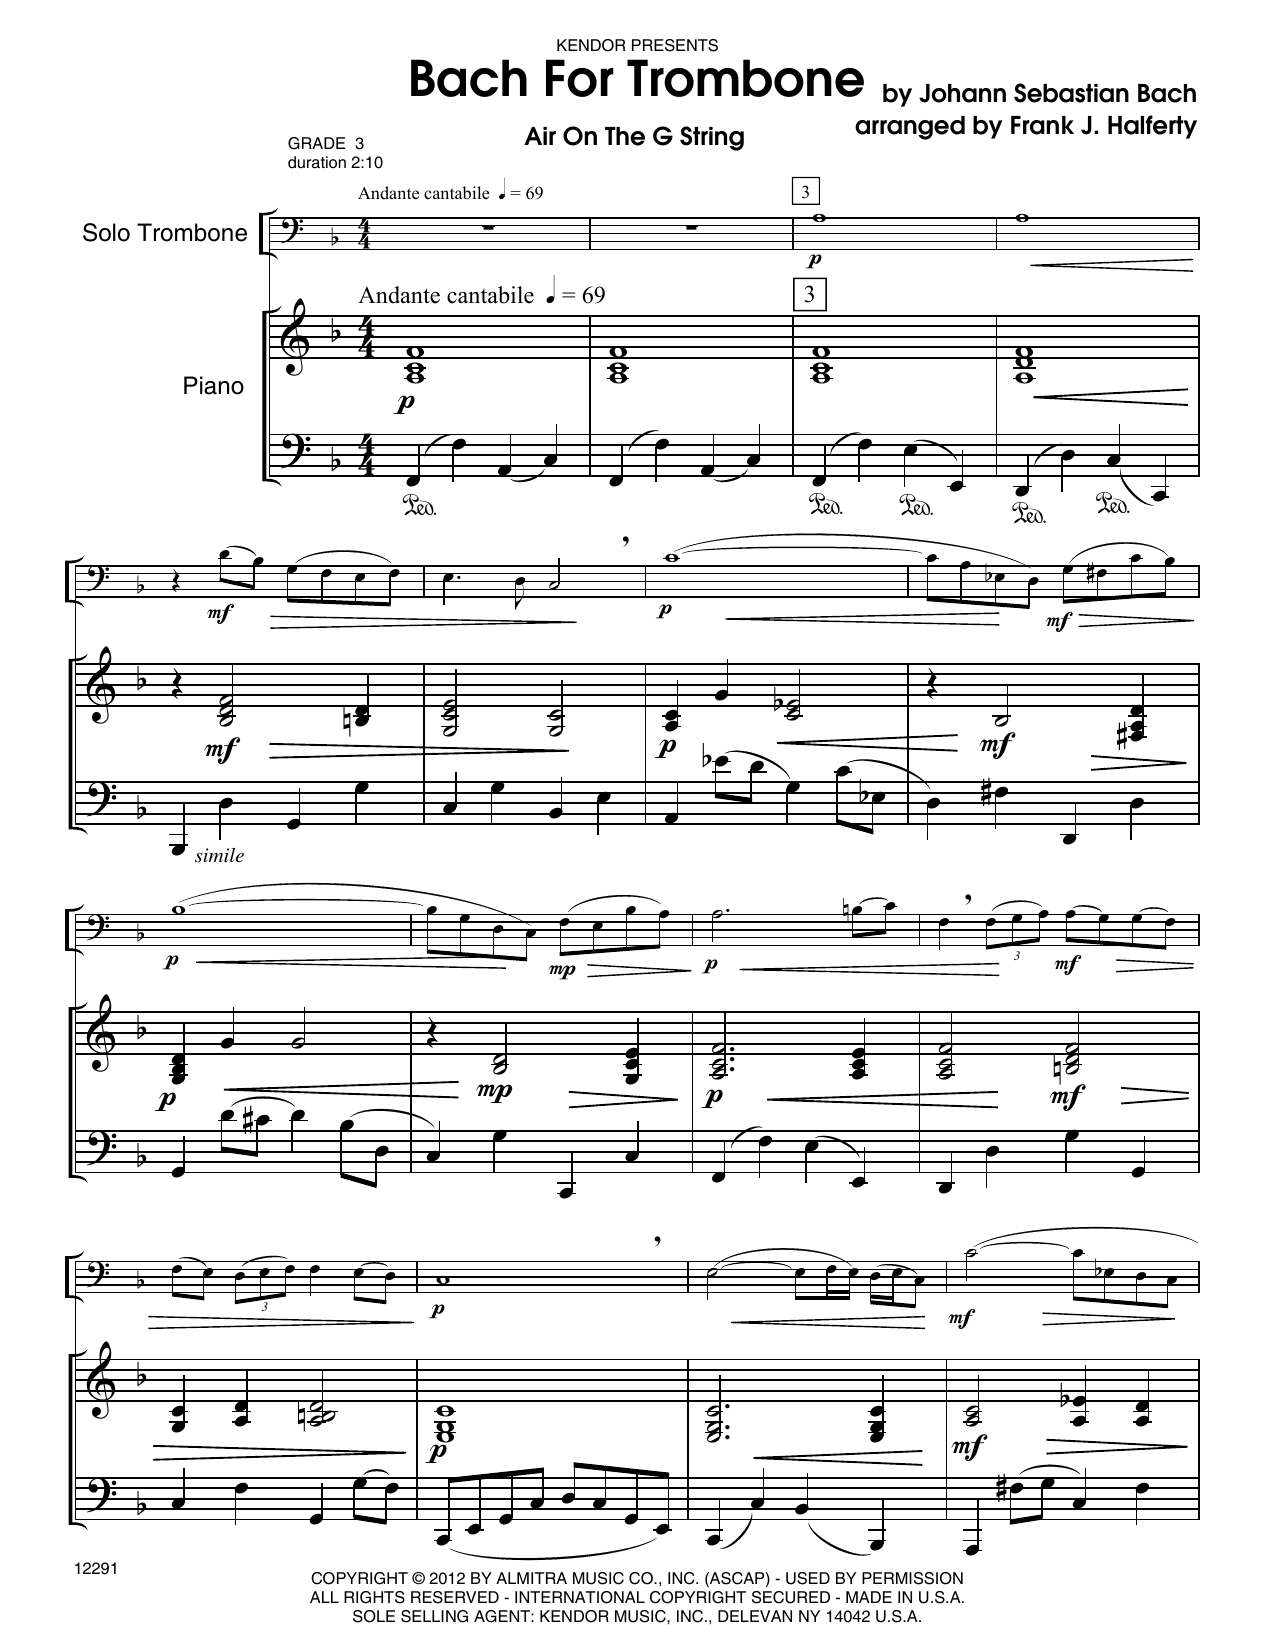 Download Frank J. Halferty Bach For Trombone - Piano Sheet Music